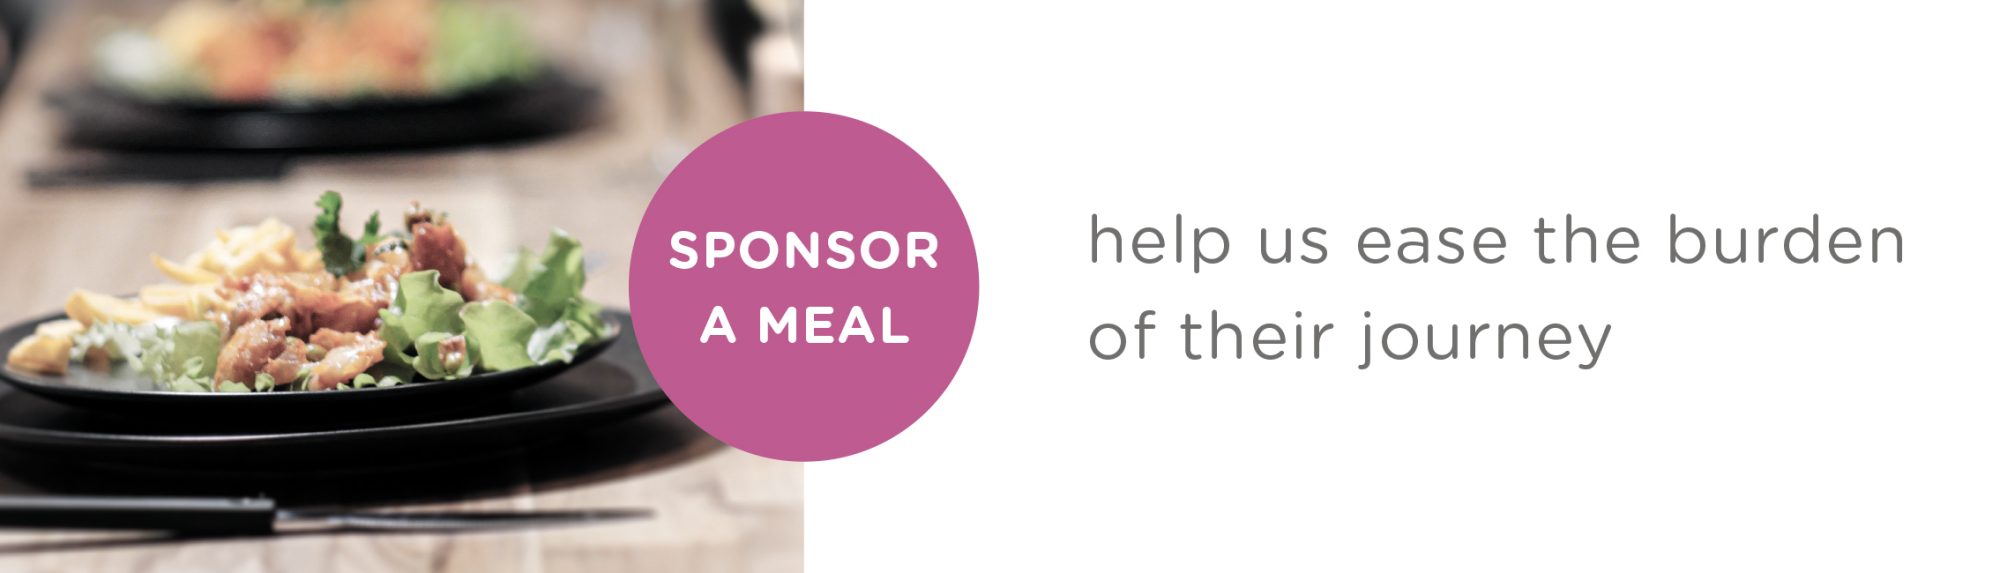 sponsor a meal